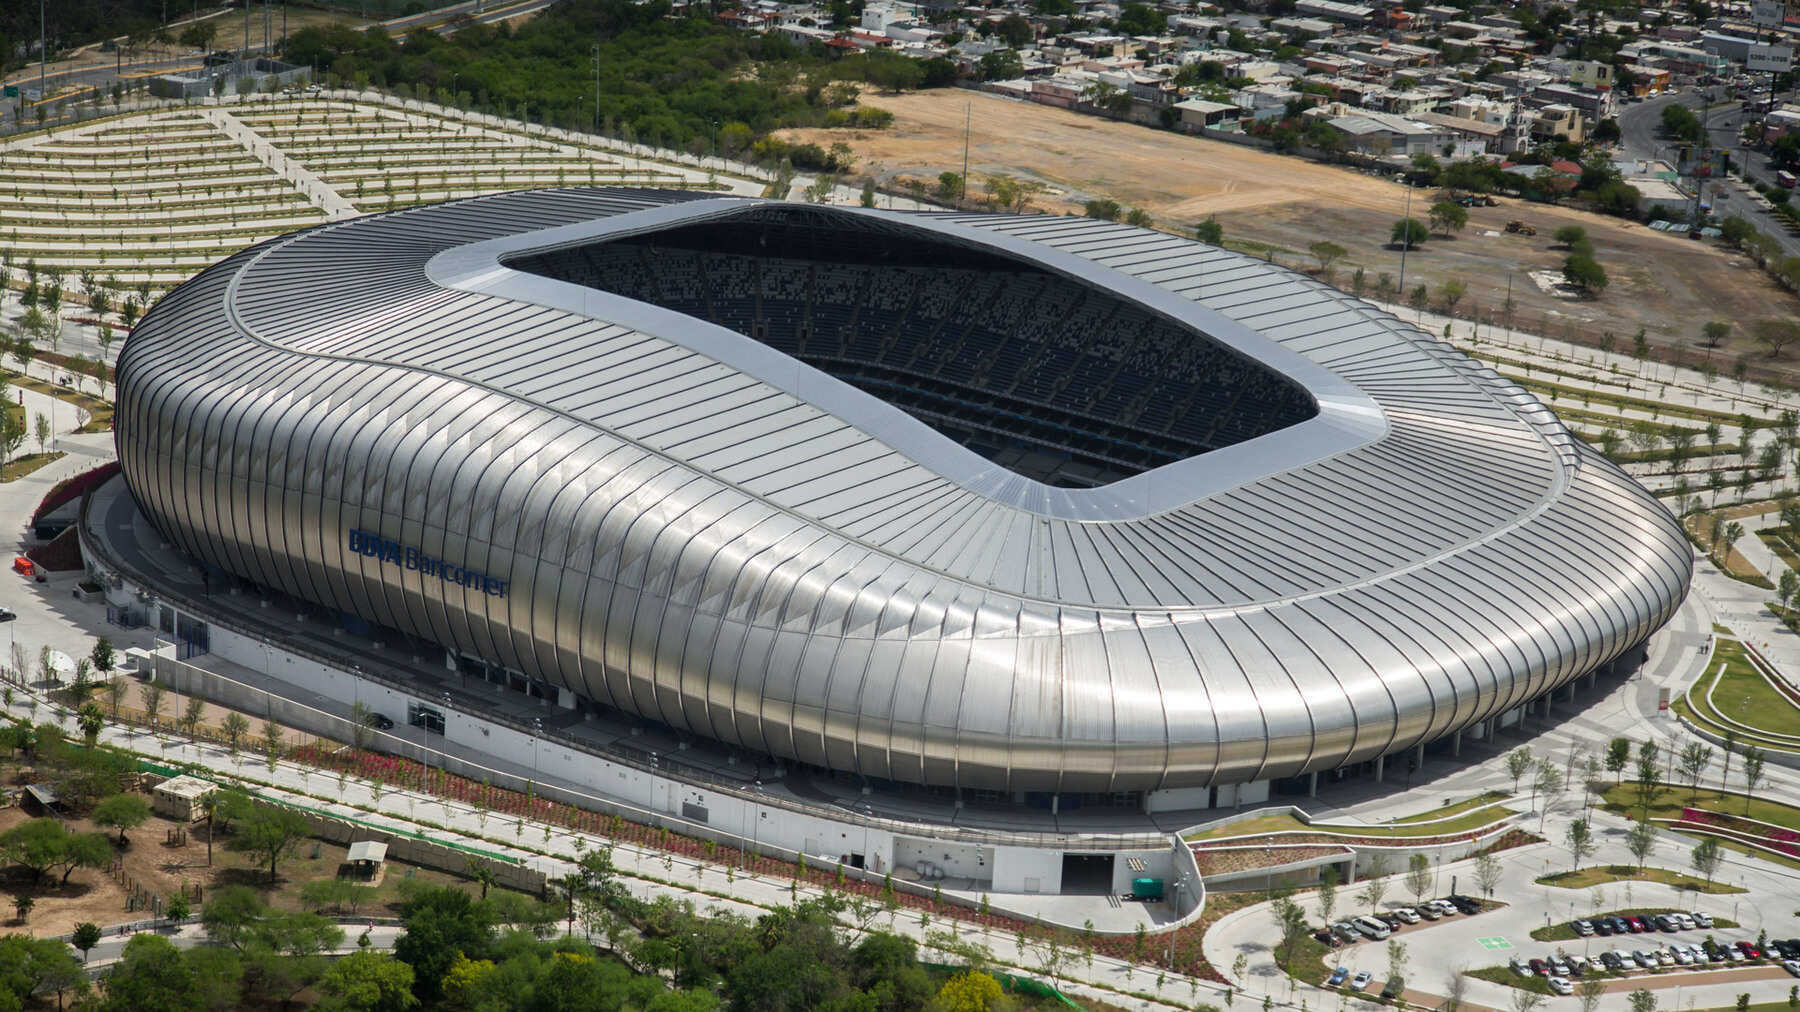 17 Extraordinary Facts About Estadio BBVA (Estadio BBVA